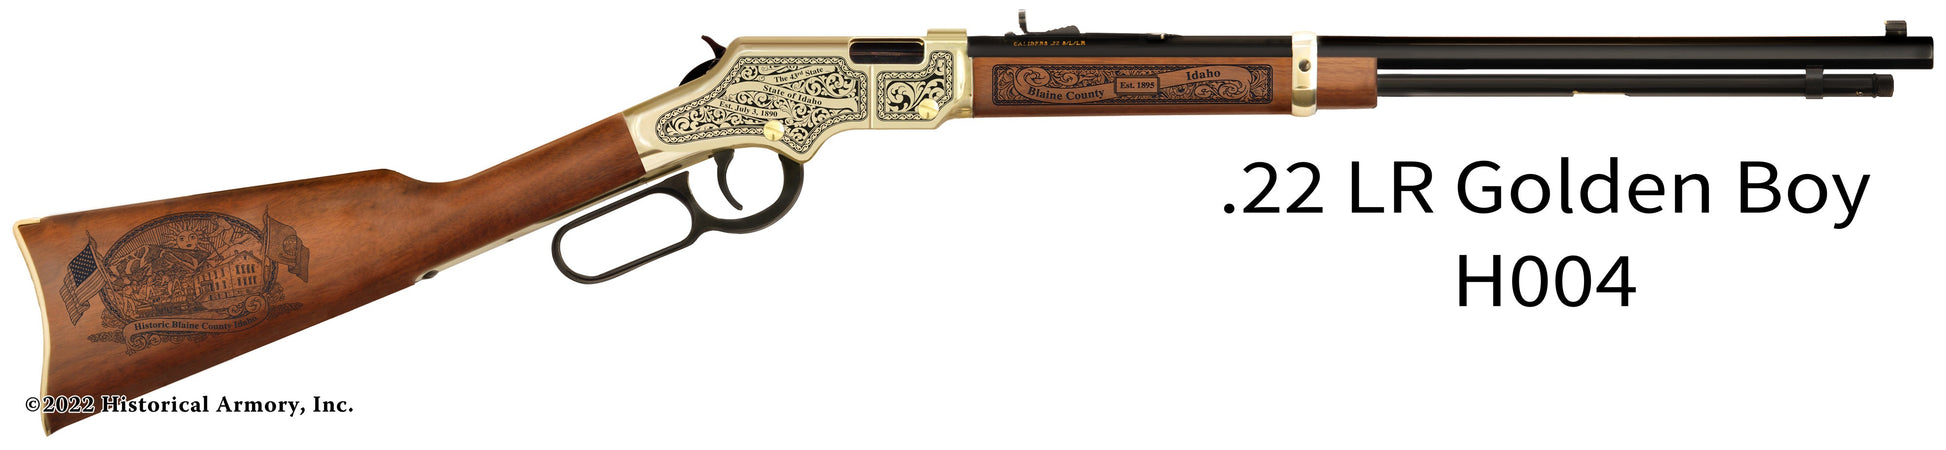 Blaine County Idaho Engraved Henry Golden Boy Rifle